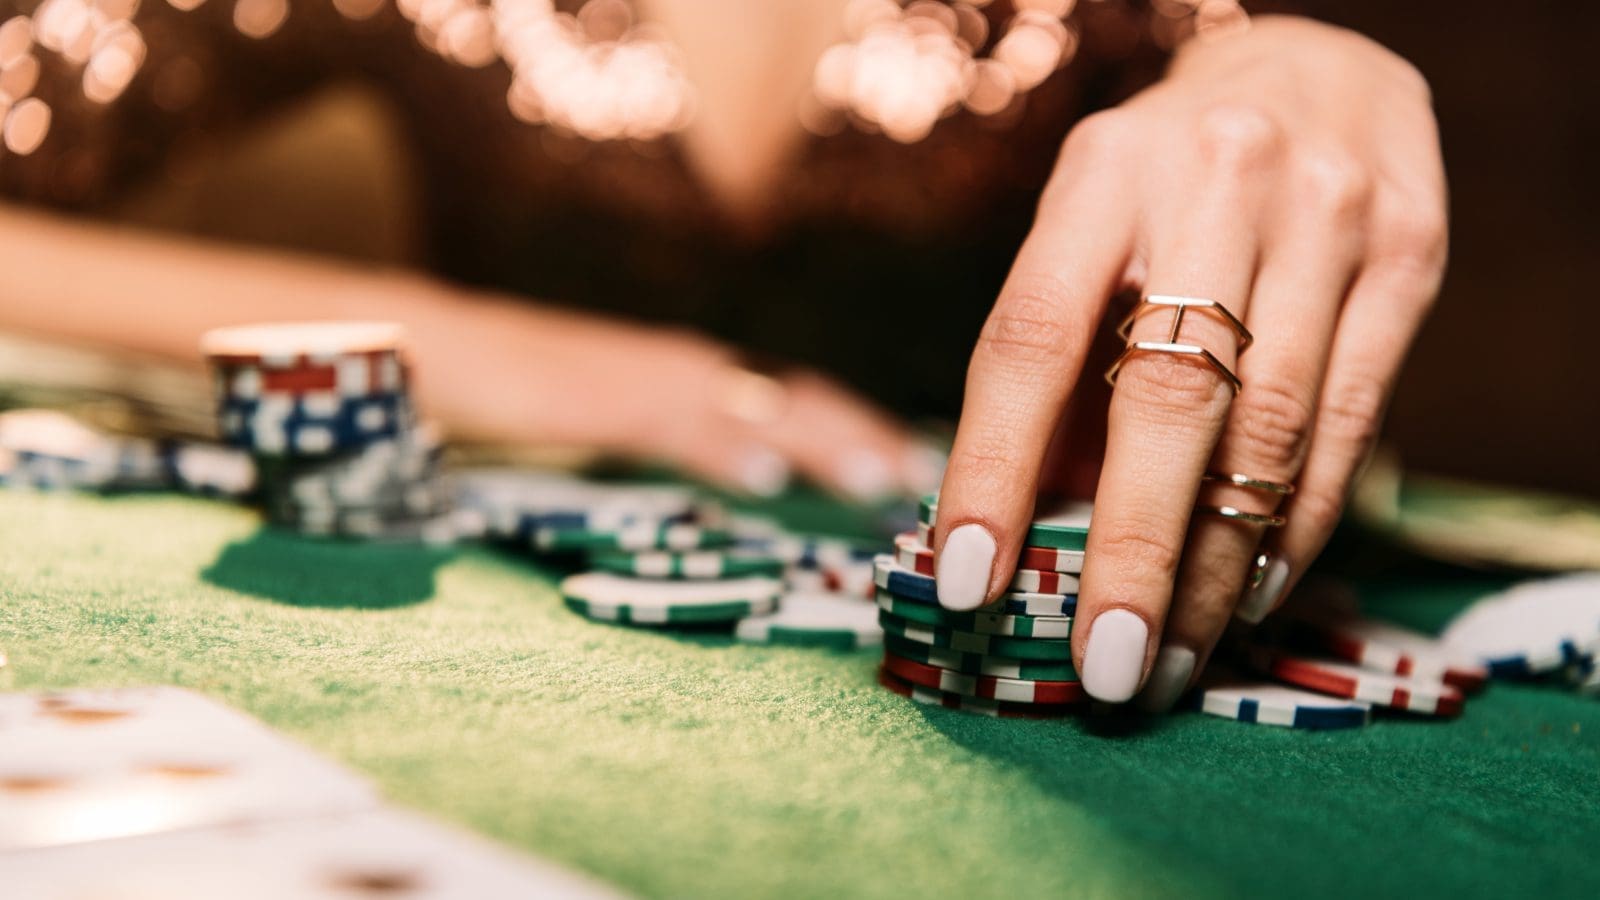 las vegas sands online gambling